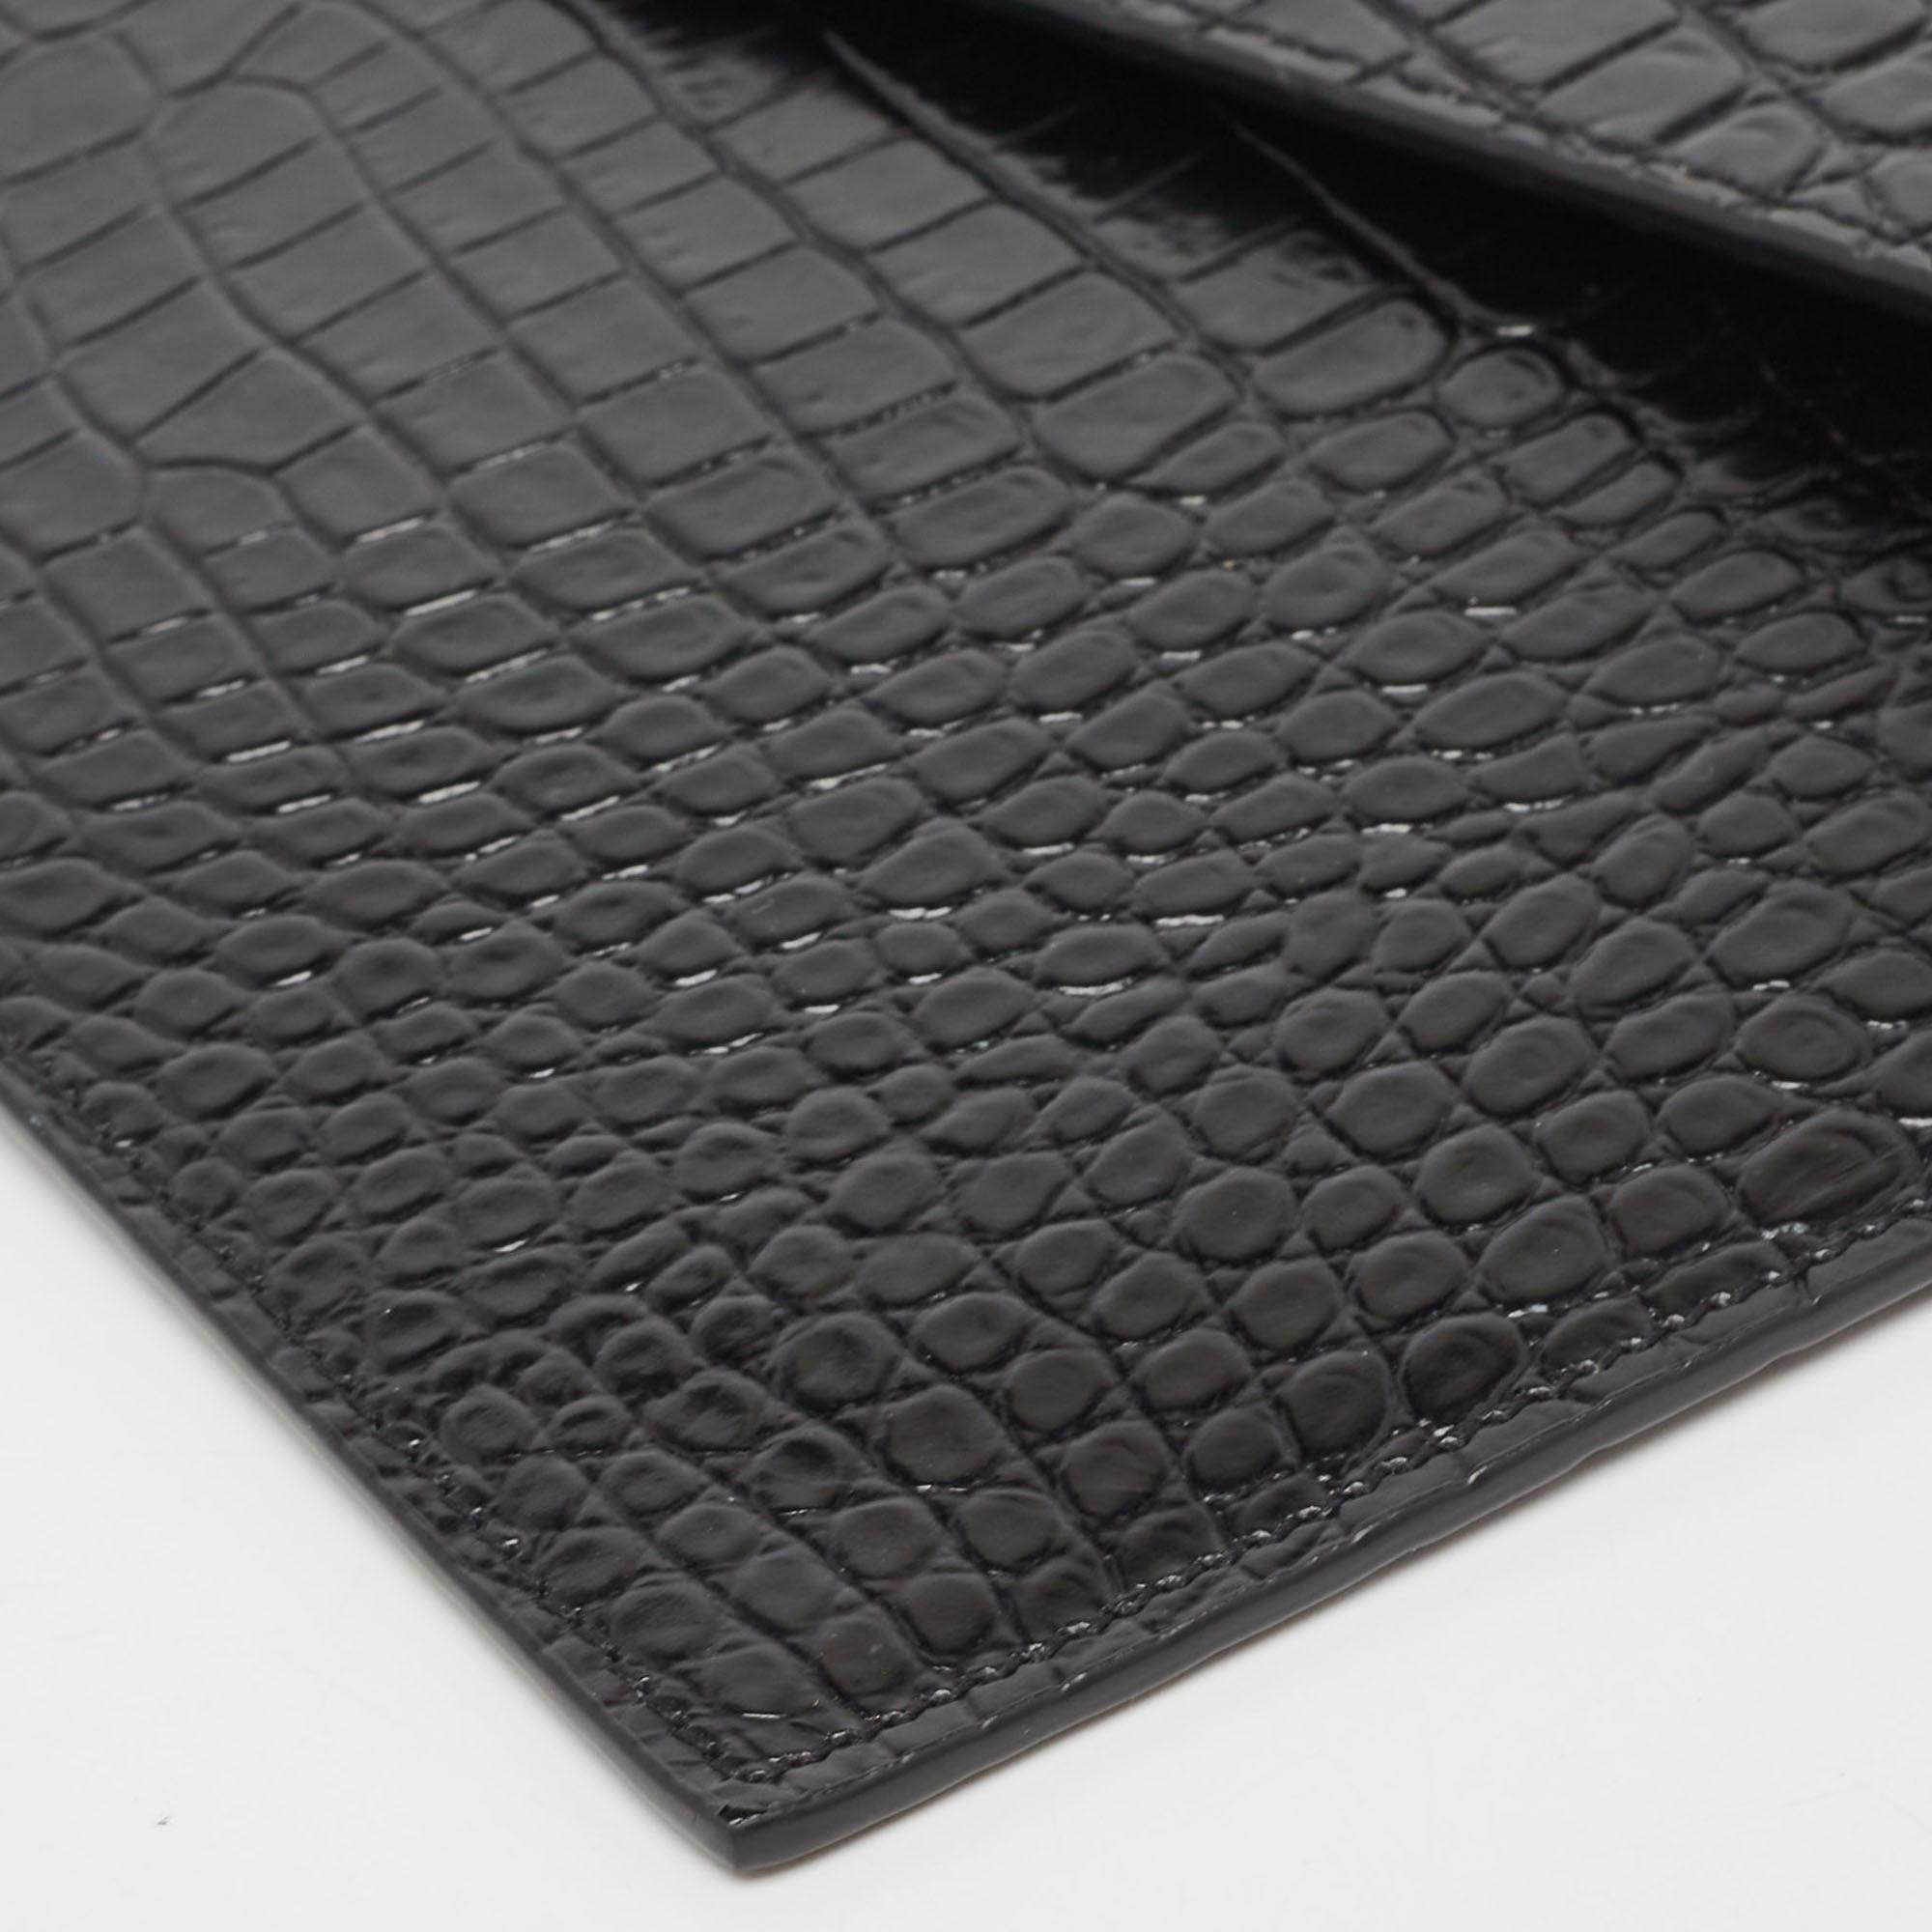 Saint Laurent Black Croc Embossed Leather Uptown Clutch 1